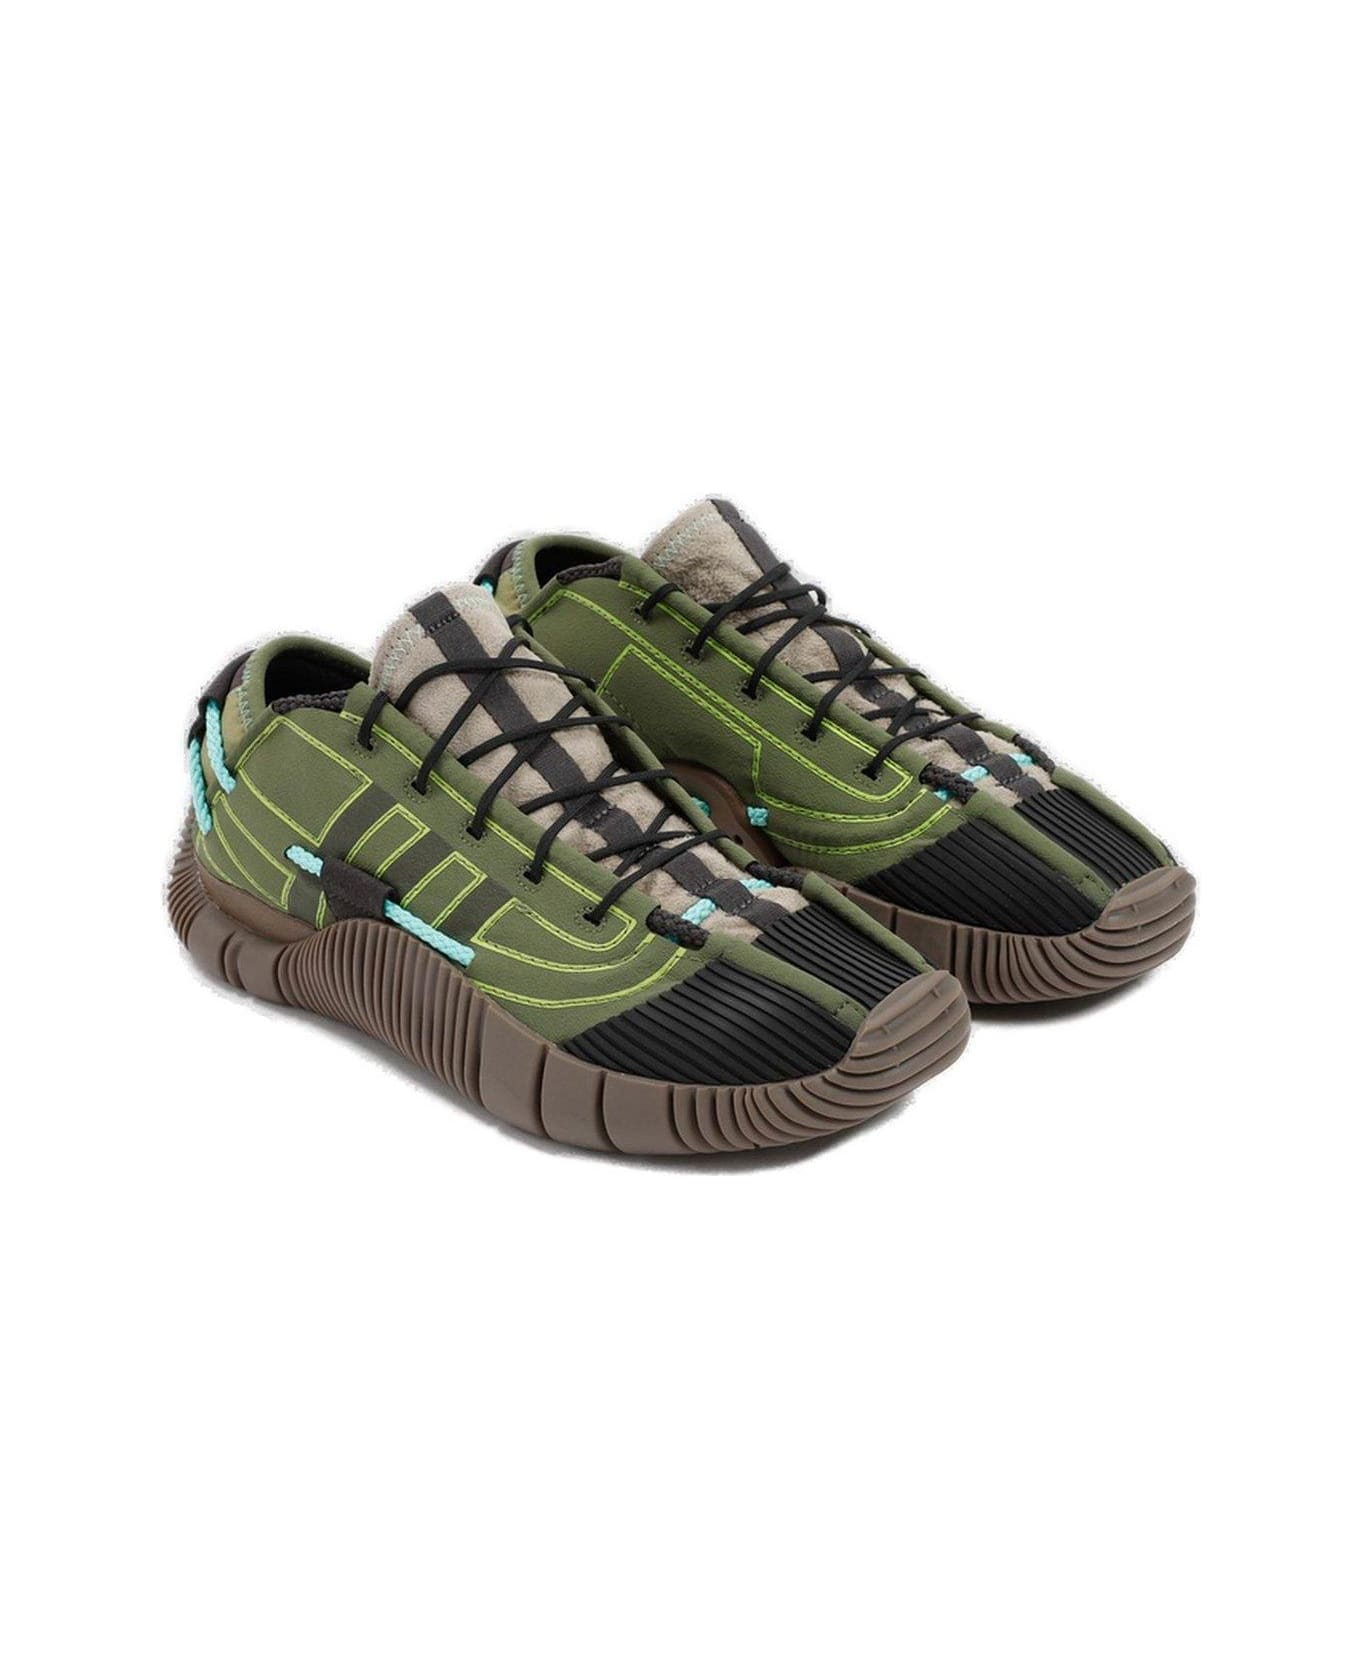 Adidas X Craig Green Scuba Phormar Sneakers - Green